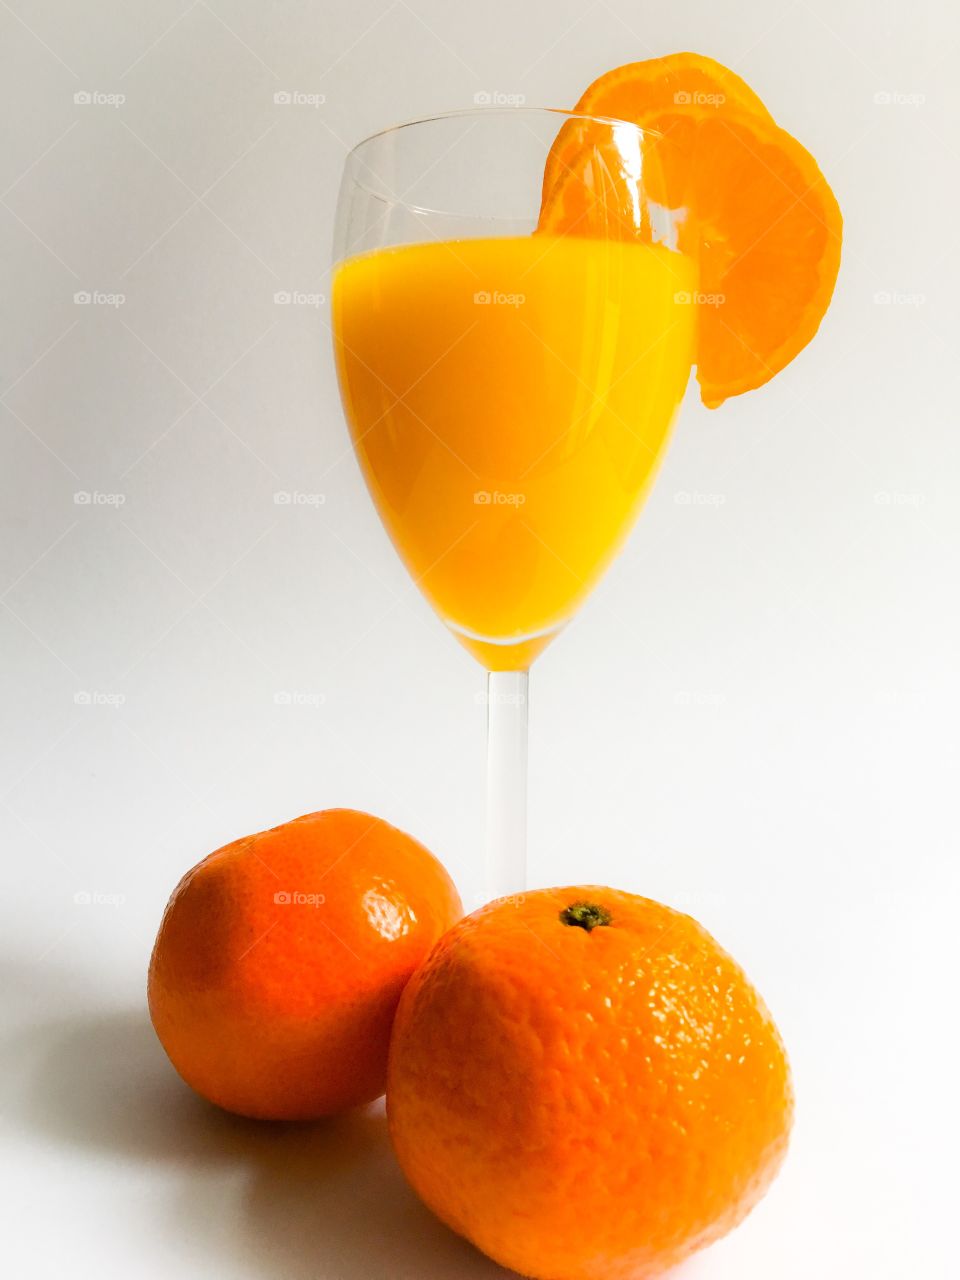 Juice from mandarin oranges in glass